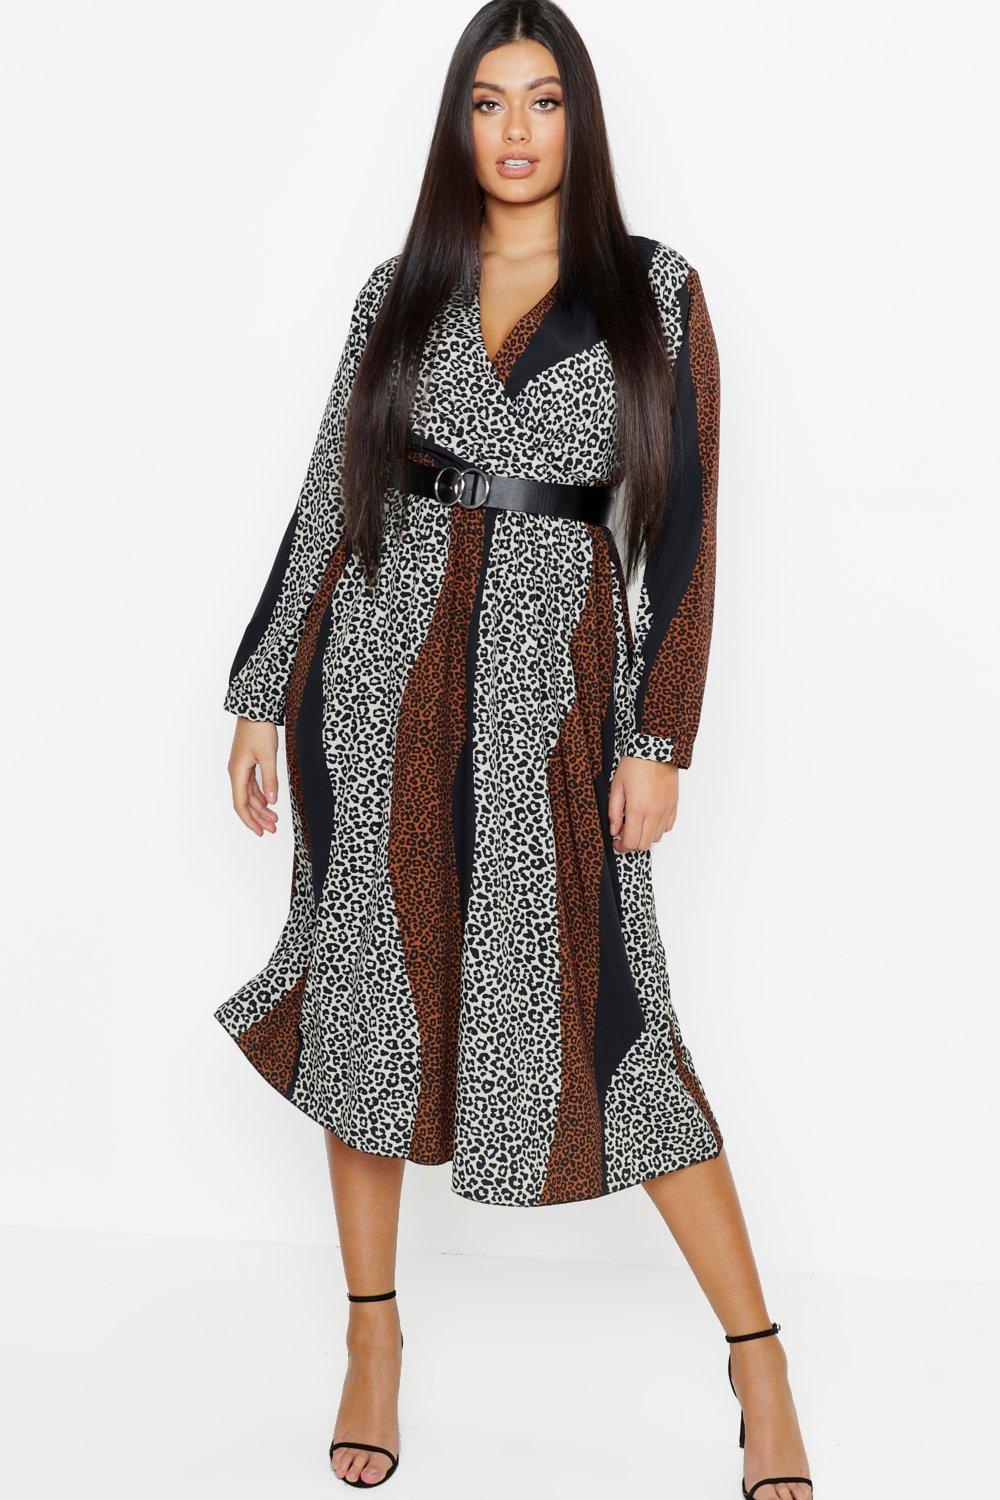 boohoo leopard dress